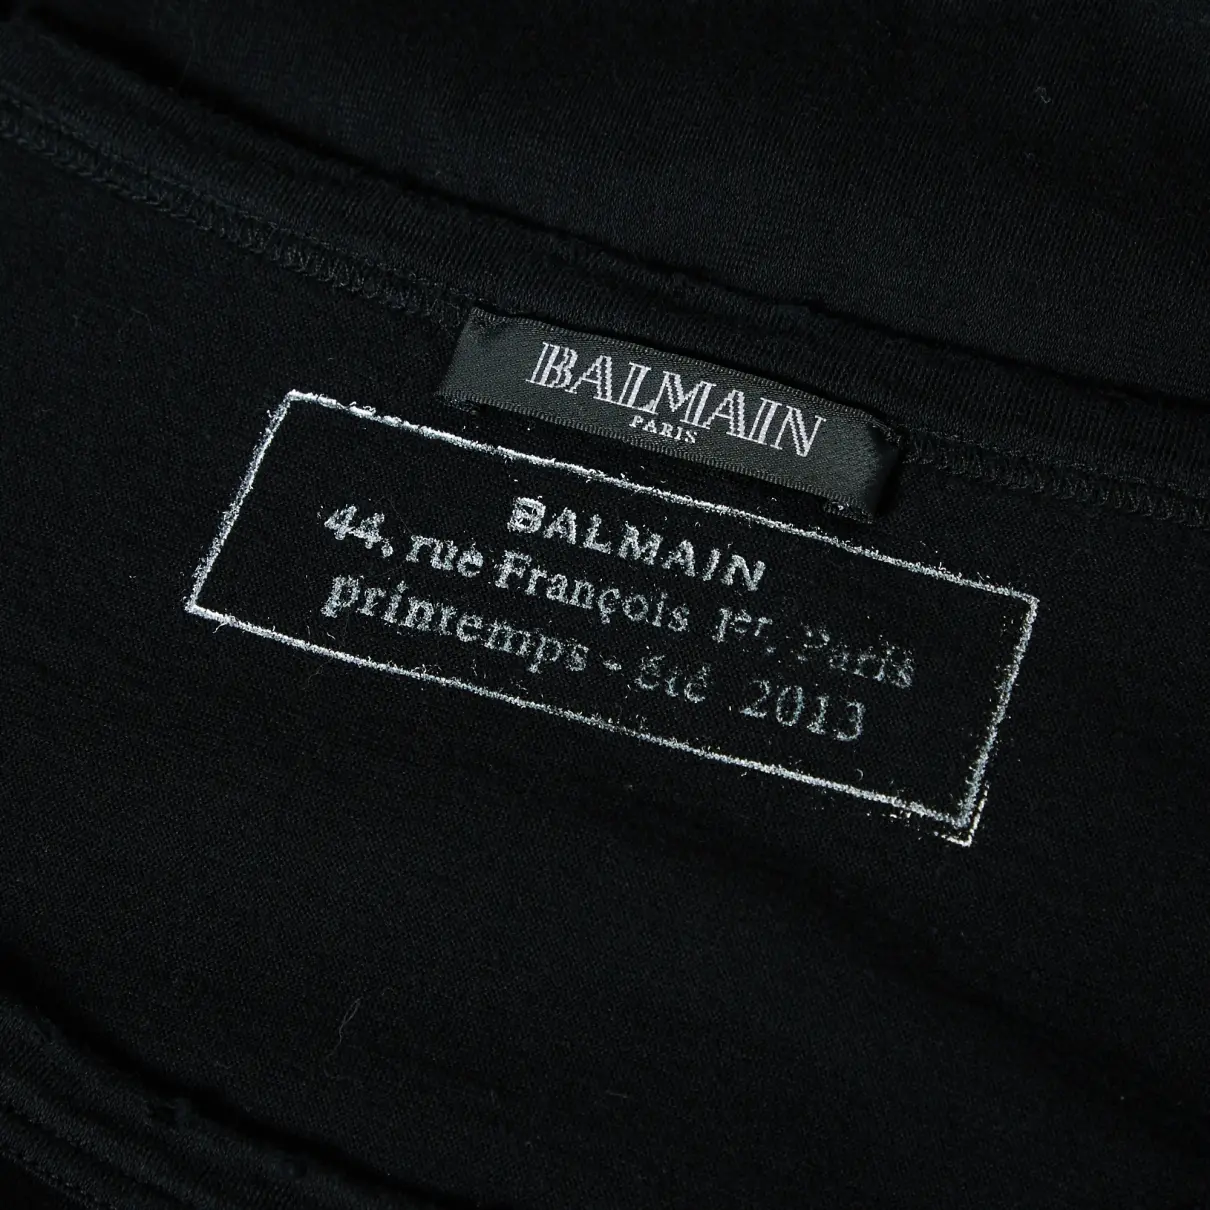 Buy Balmain Black Cotton T-shirt online